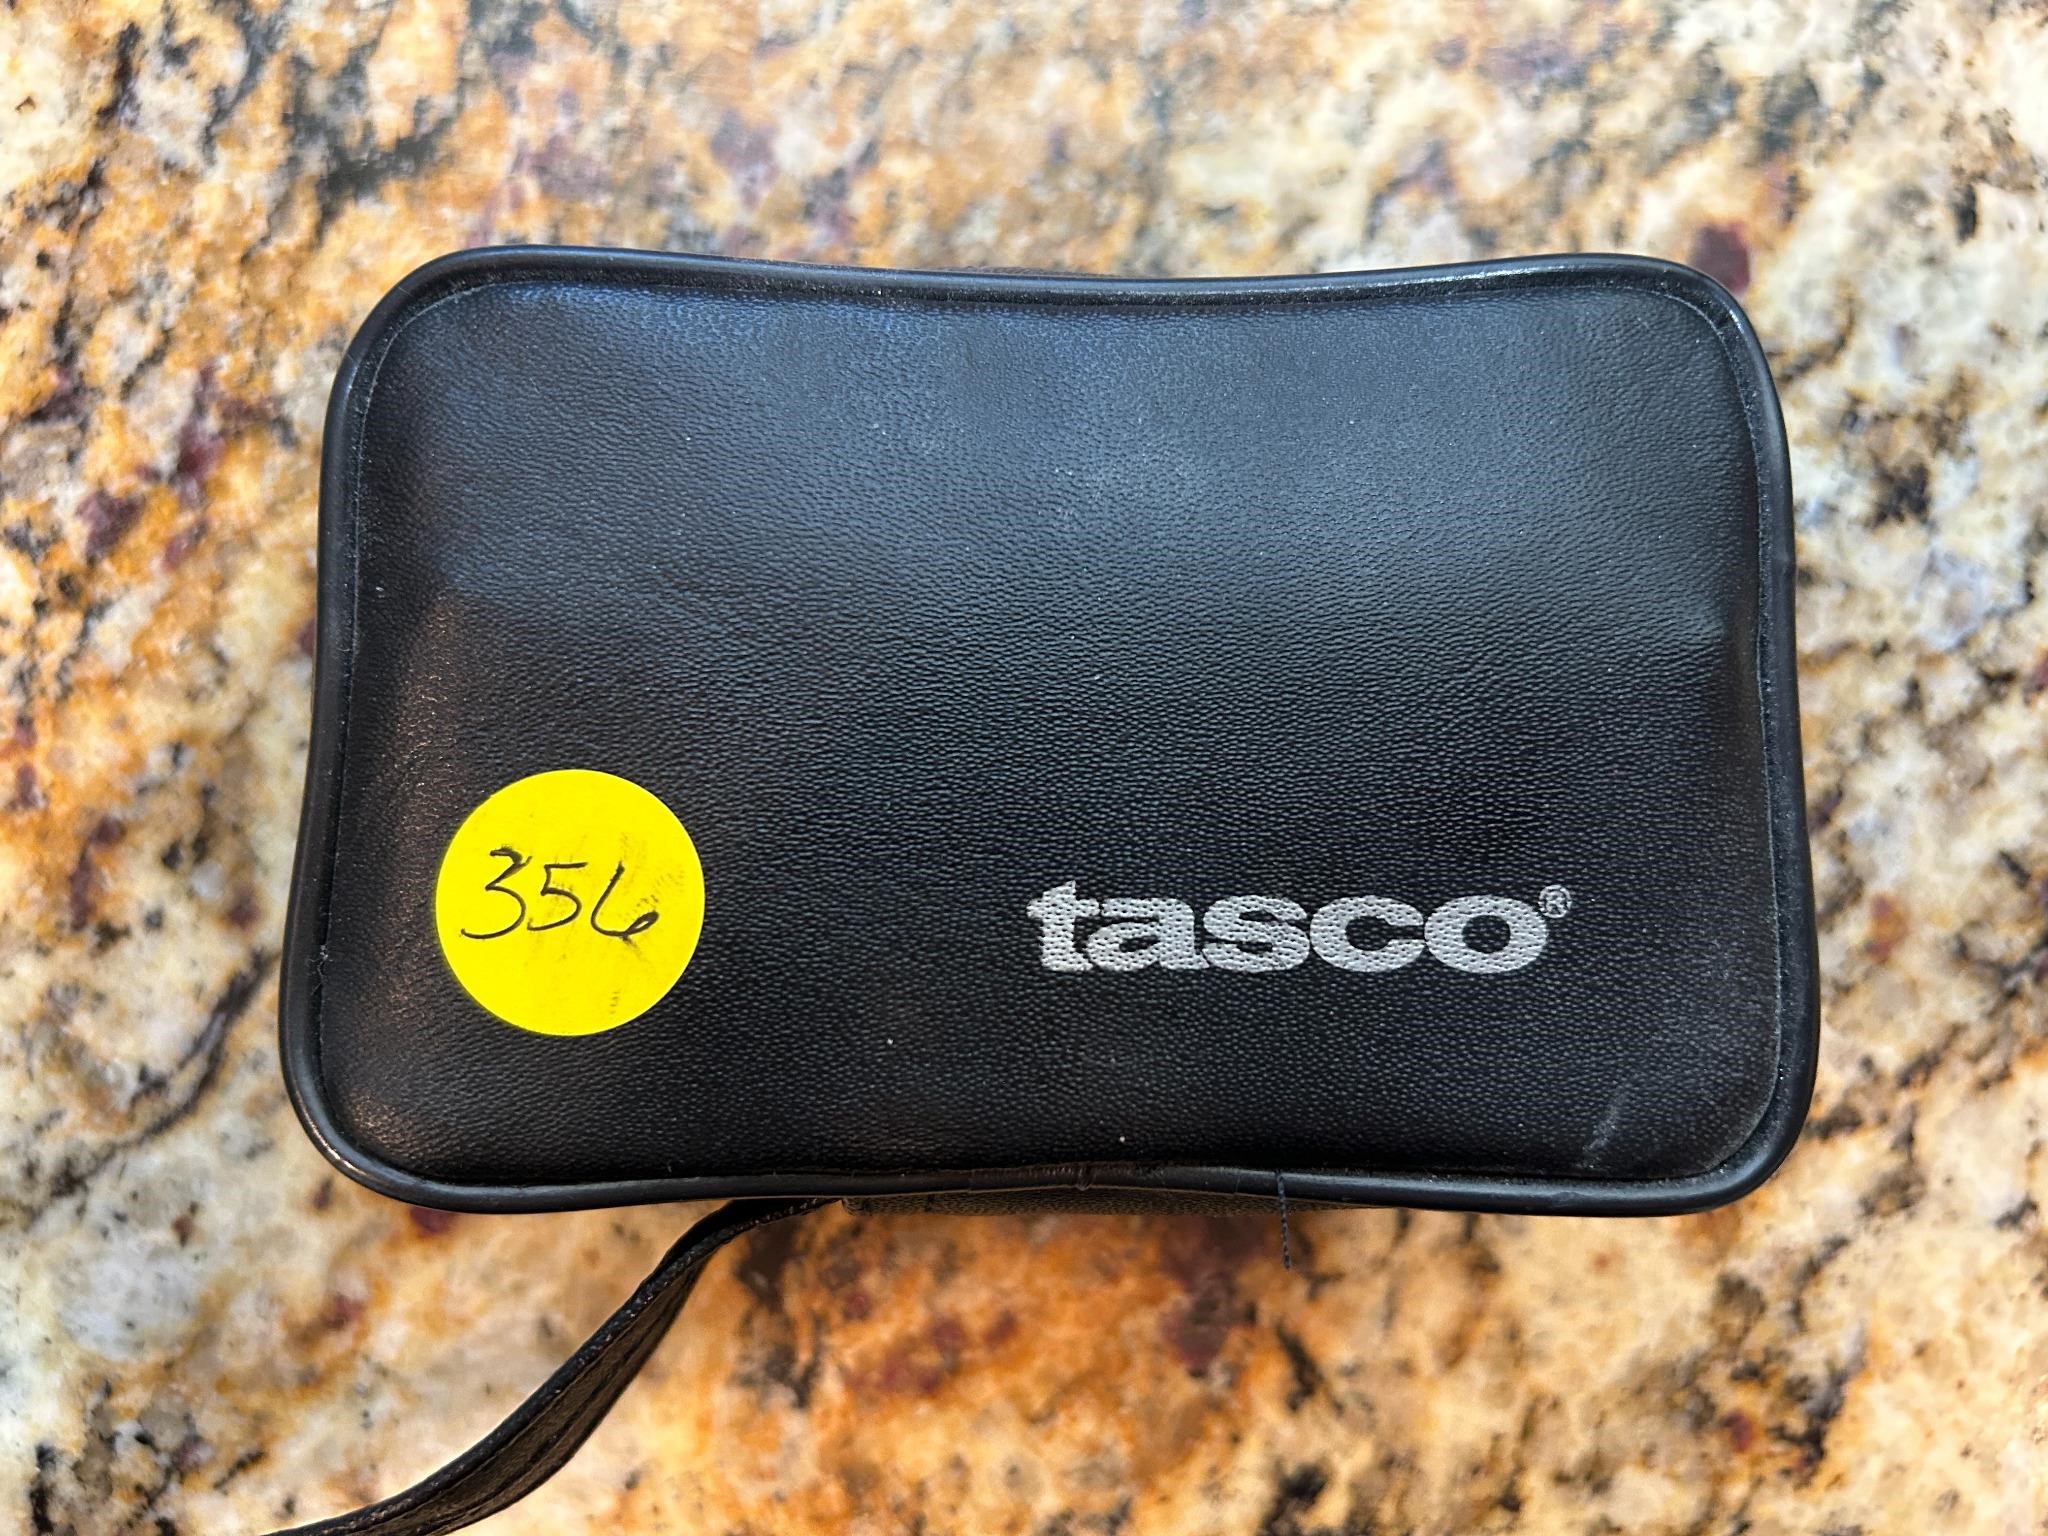 Petite Tasco Binoculars in carrying case